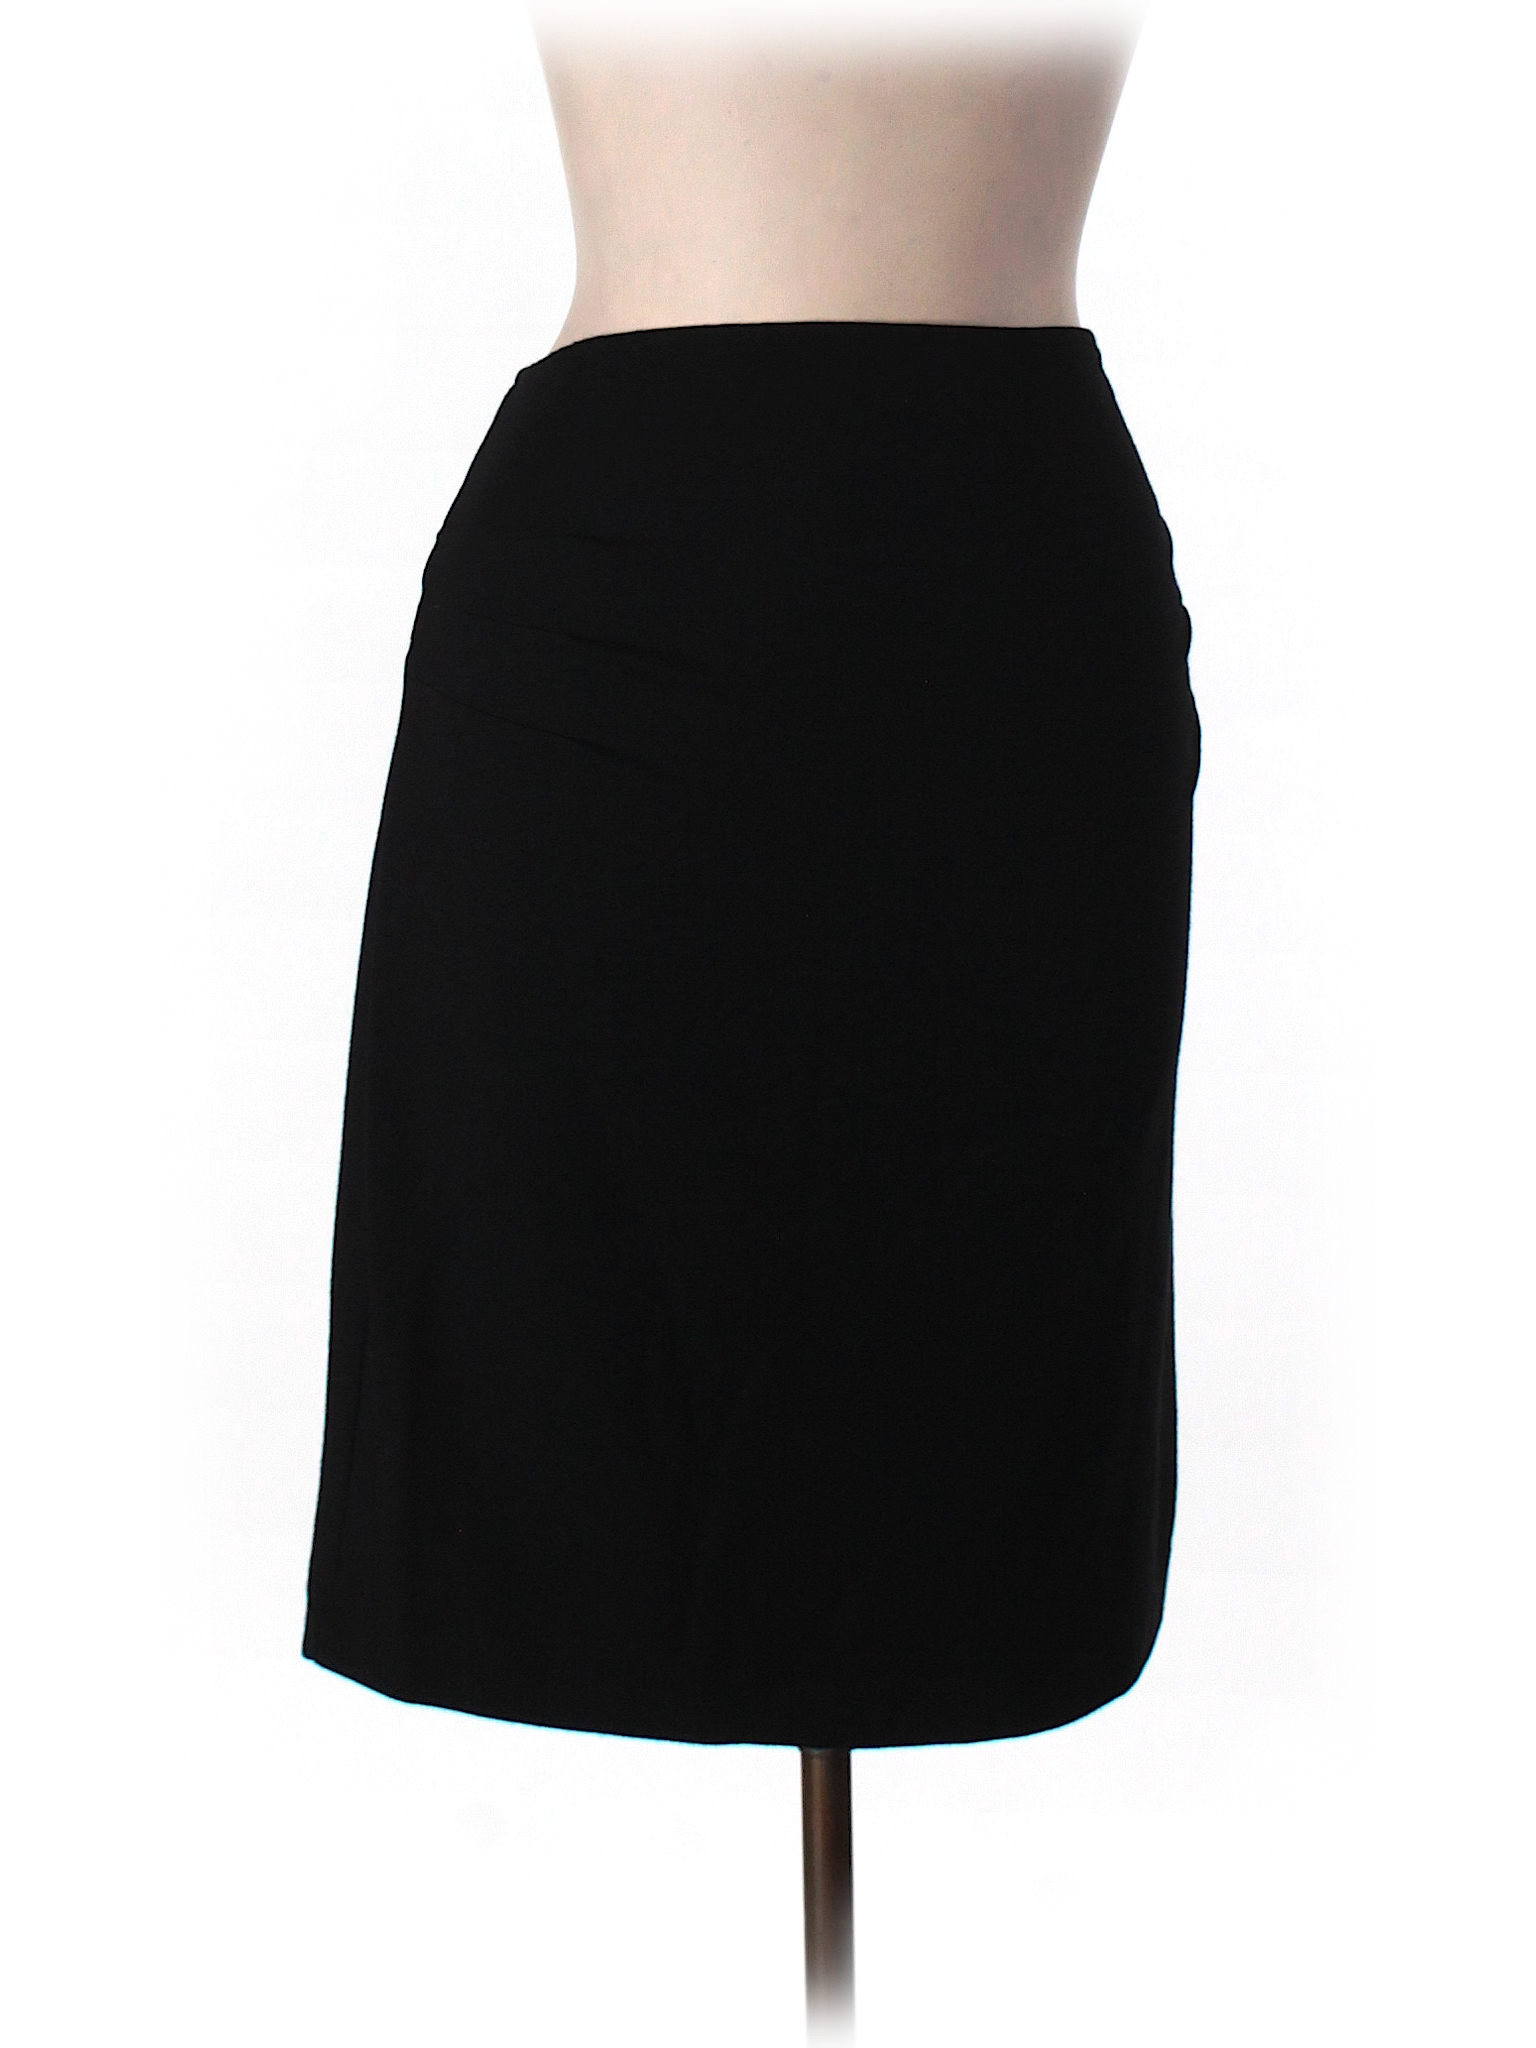 H&M Solid Black Casual Skirt Size L - 64% off | thredUP